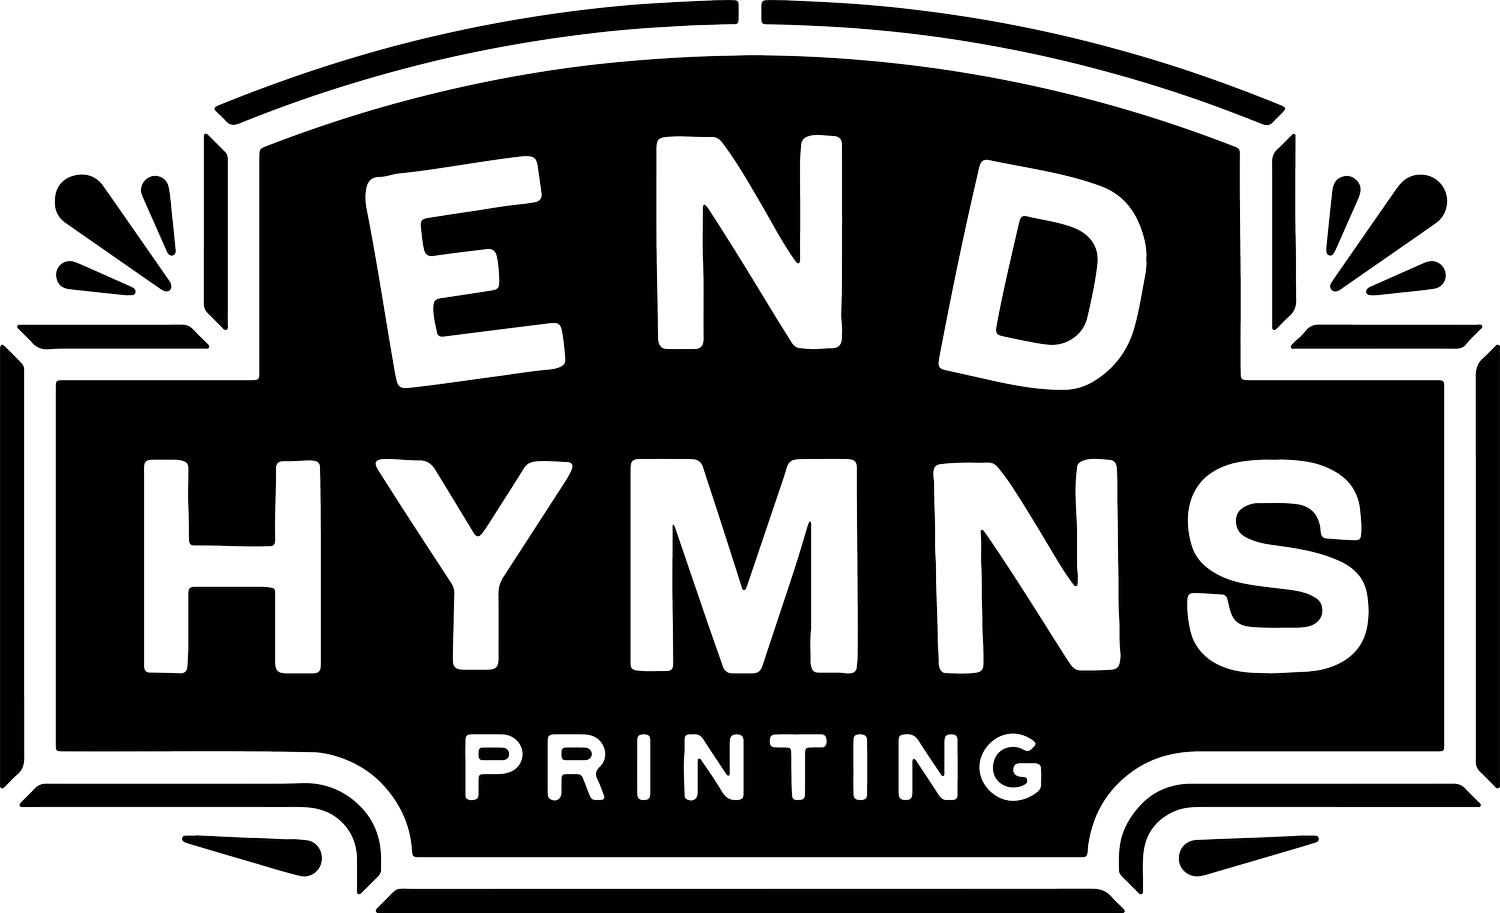  End Hymns Printing